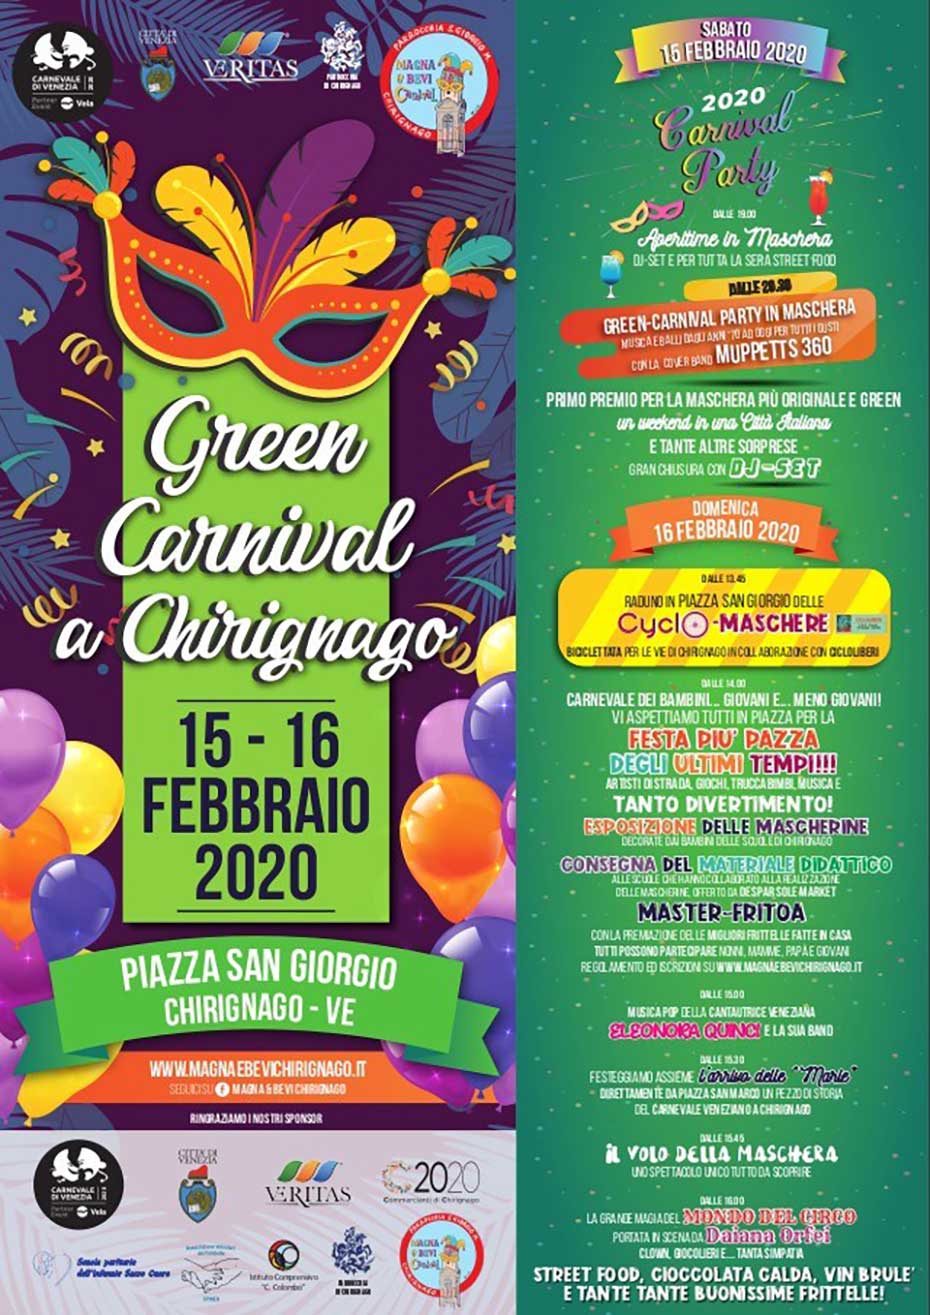 Green Carnival, Carnevale Chirignago Venezia